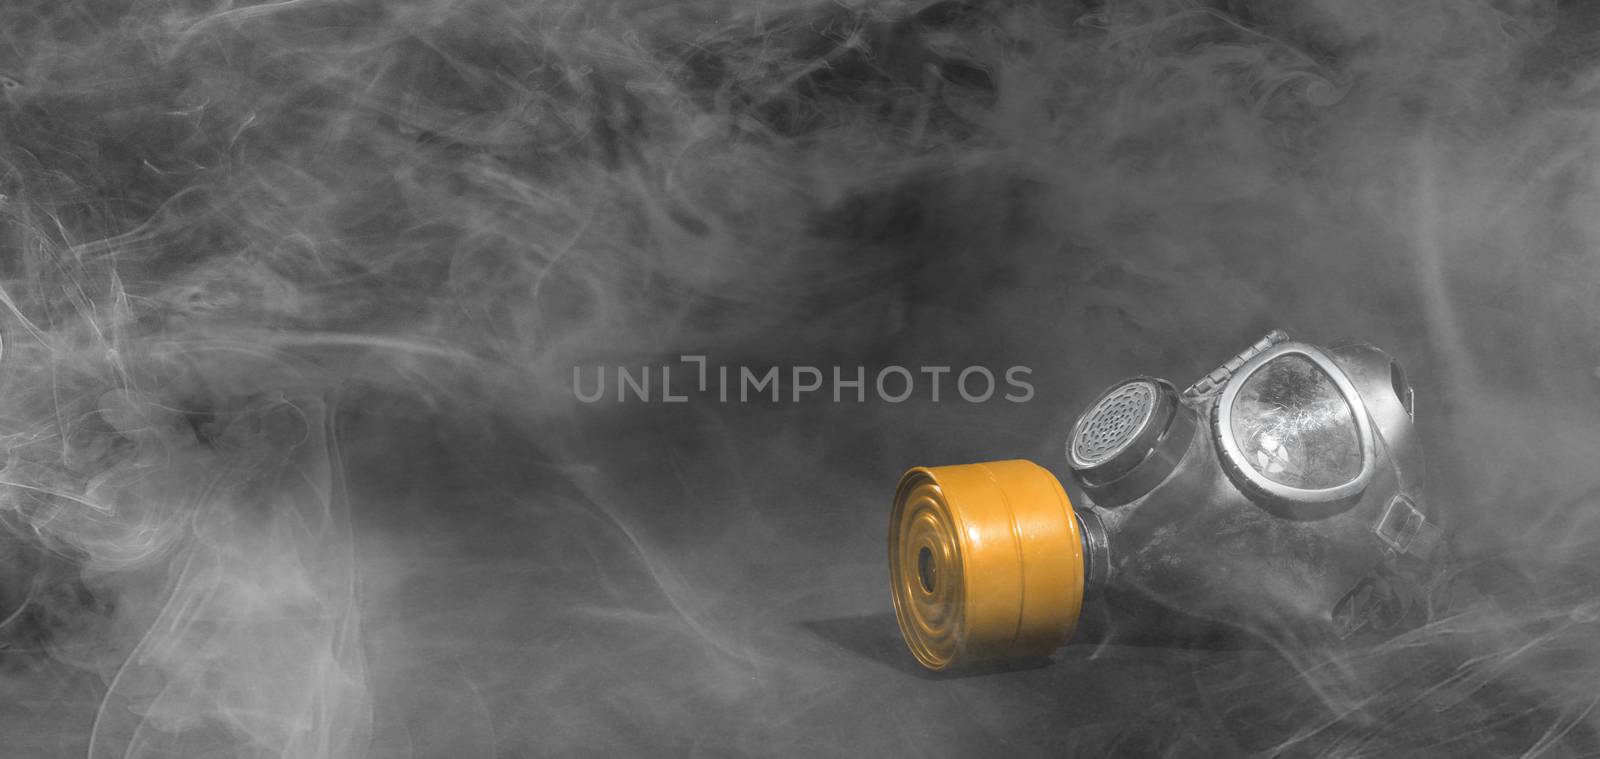 Vintage gasmask isolated on black background - Smoke in the room - Orange filter